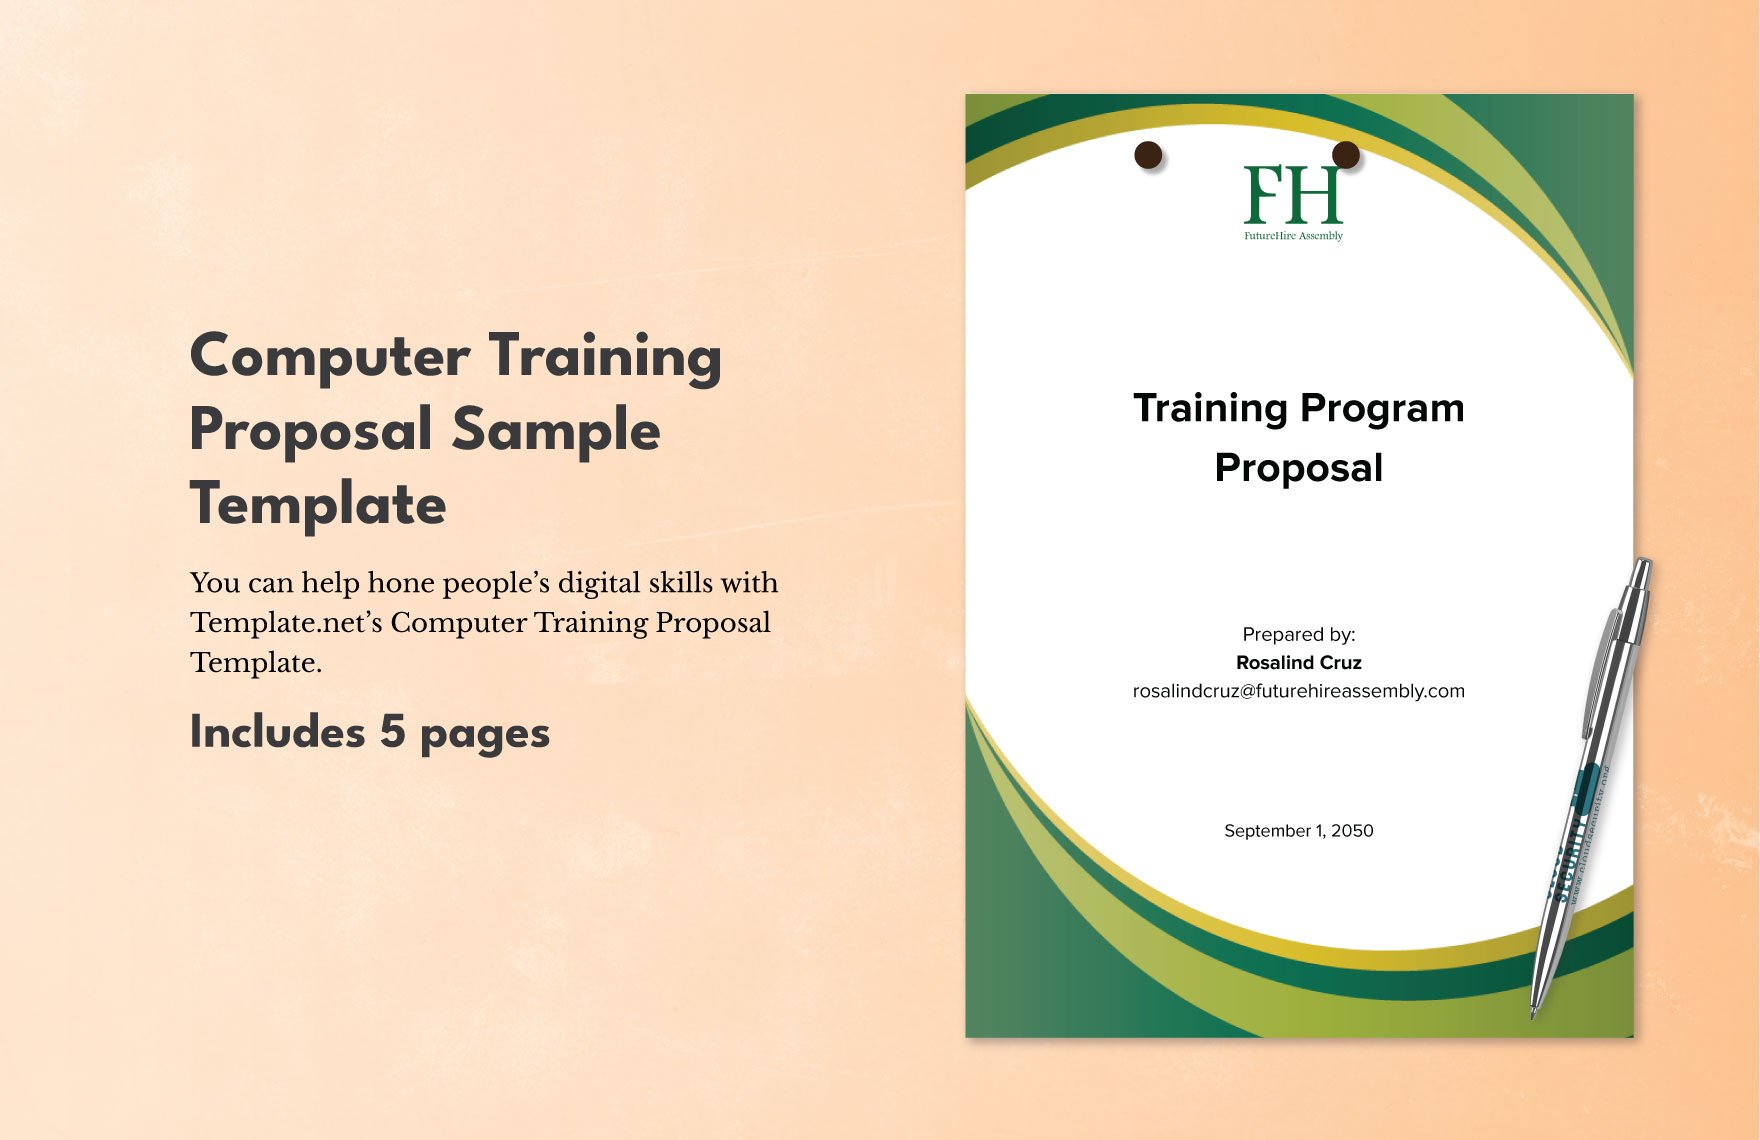 Training Program Proposal Sample Template